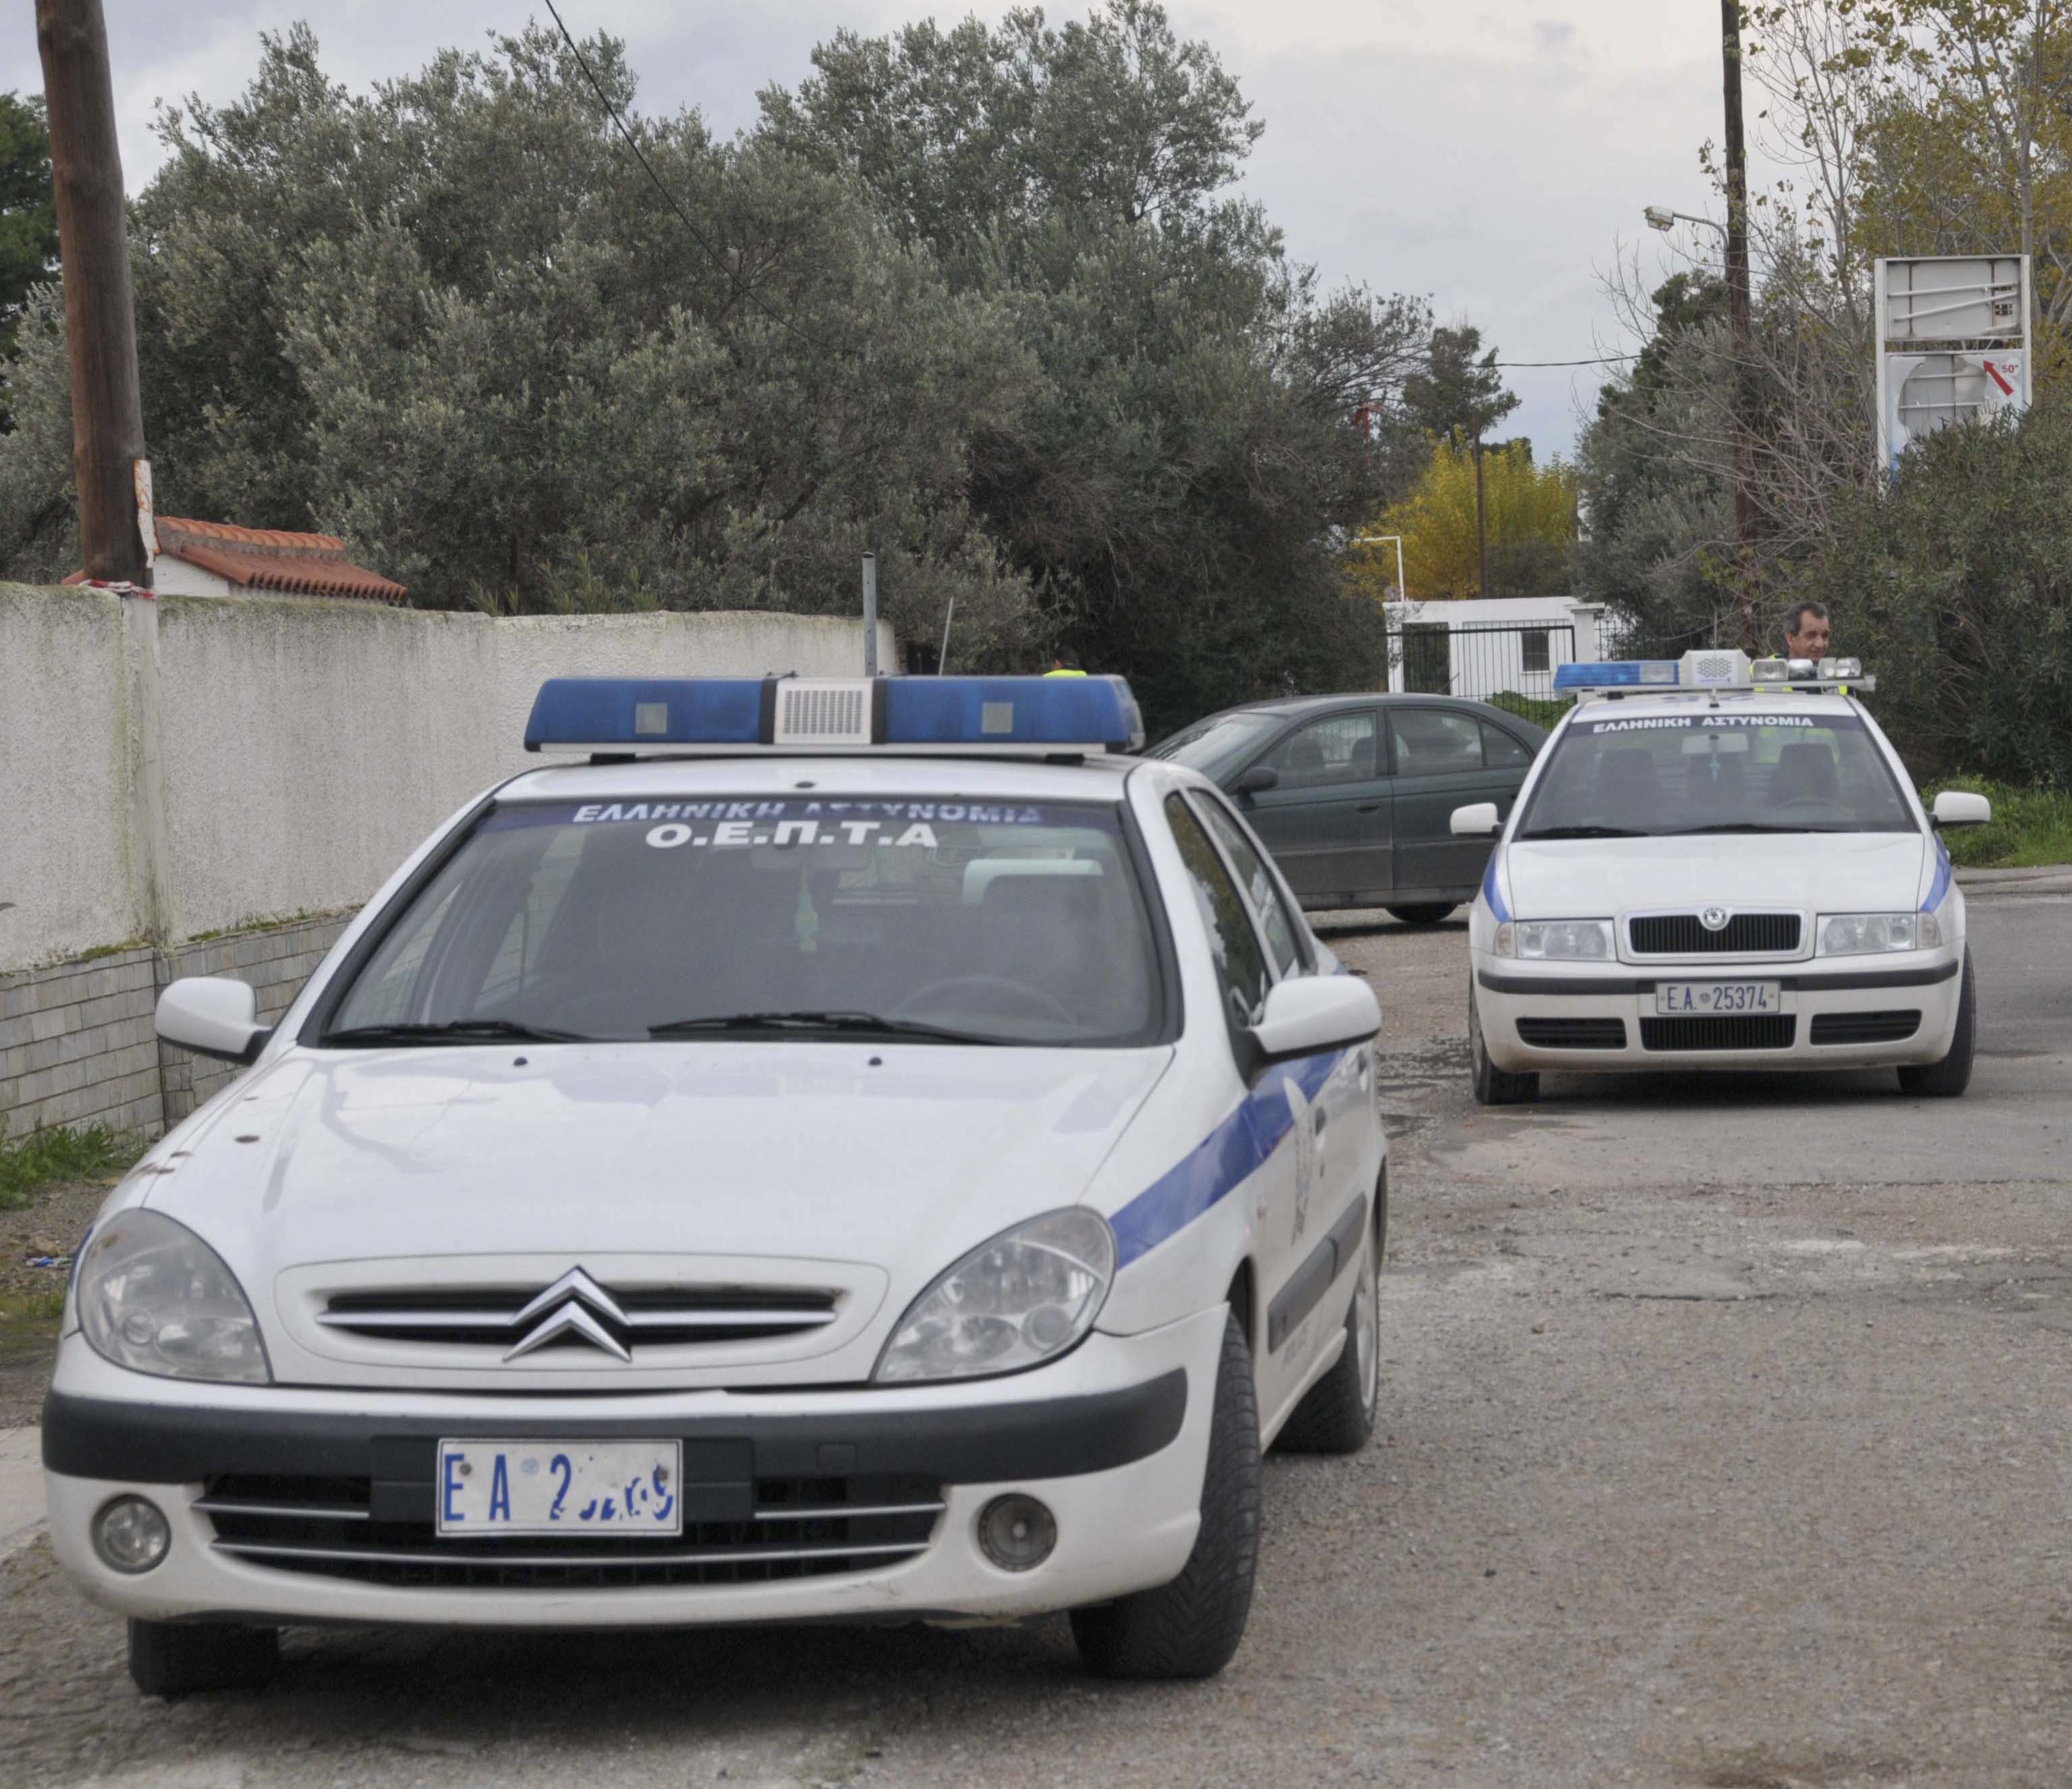 Kαι δεύτερη δολοφονία ηλικιωμένου στην Κρήτη;